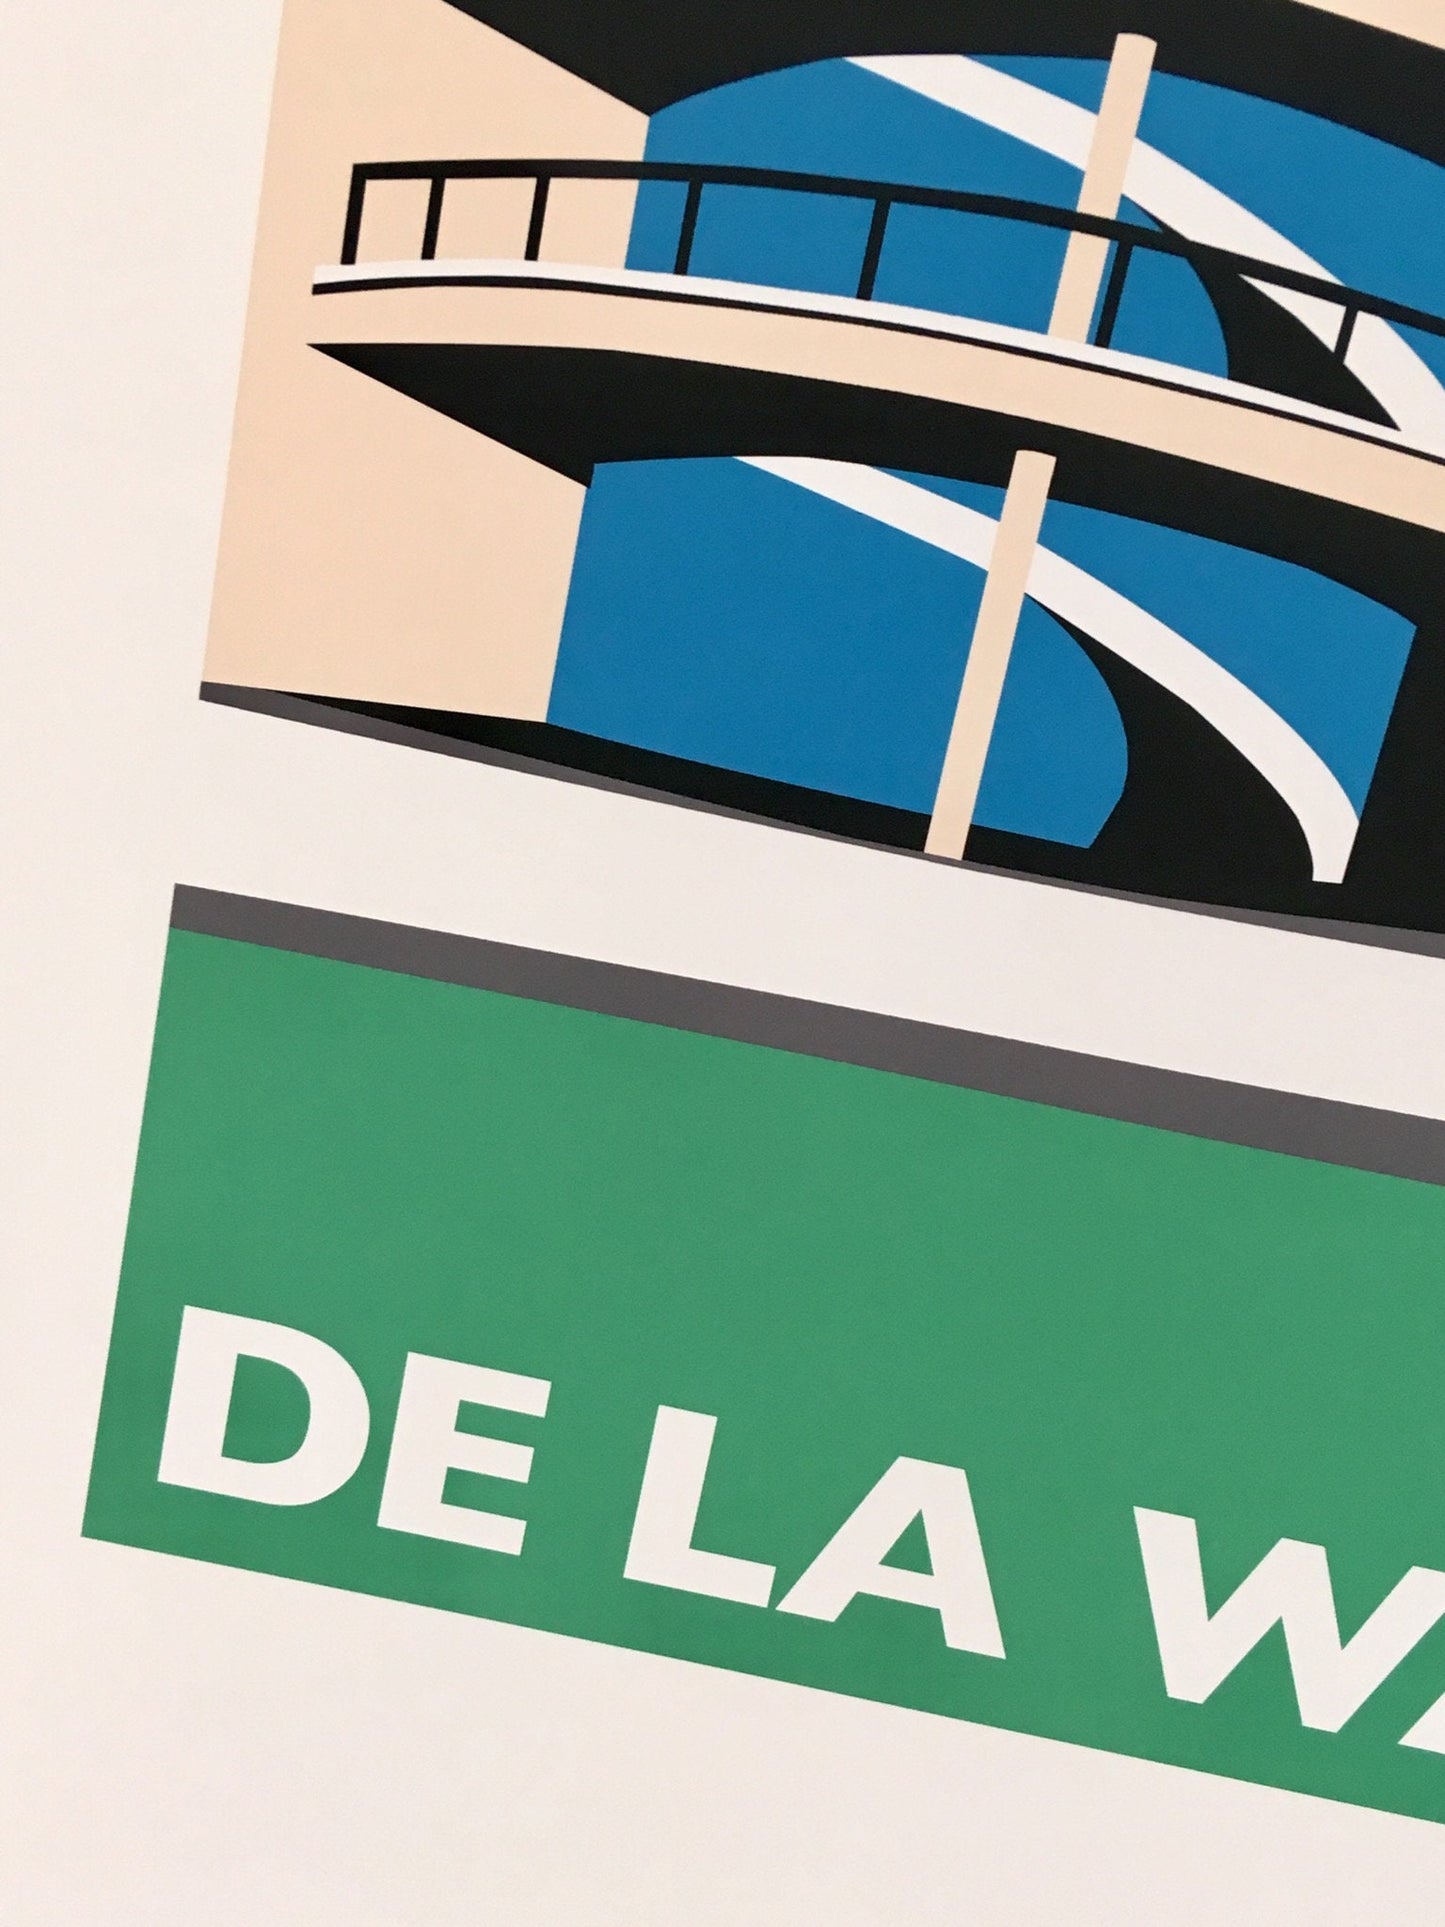 DE LA WARR Pavilion Travel Poster - Bexhill on Sea - Art Deco Print - Illustration by Rebecca Pymar